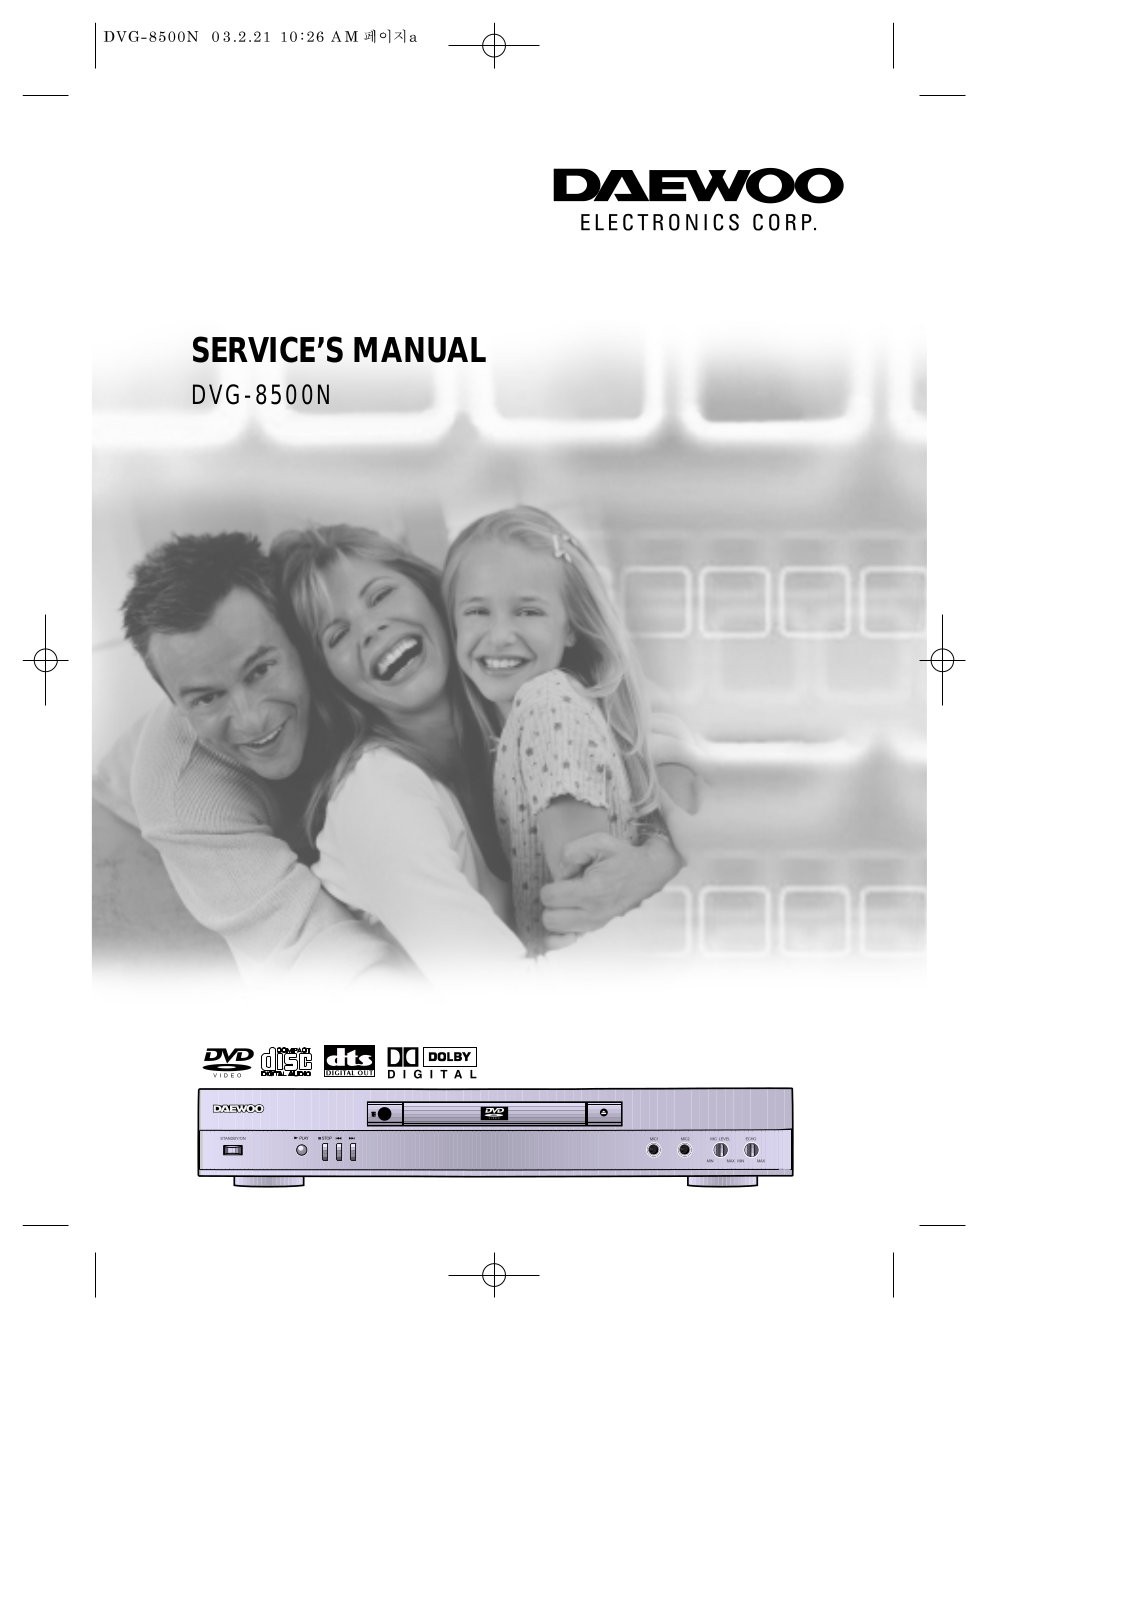 DAEWOO DVG-8500N Service Manual